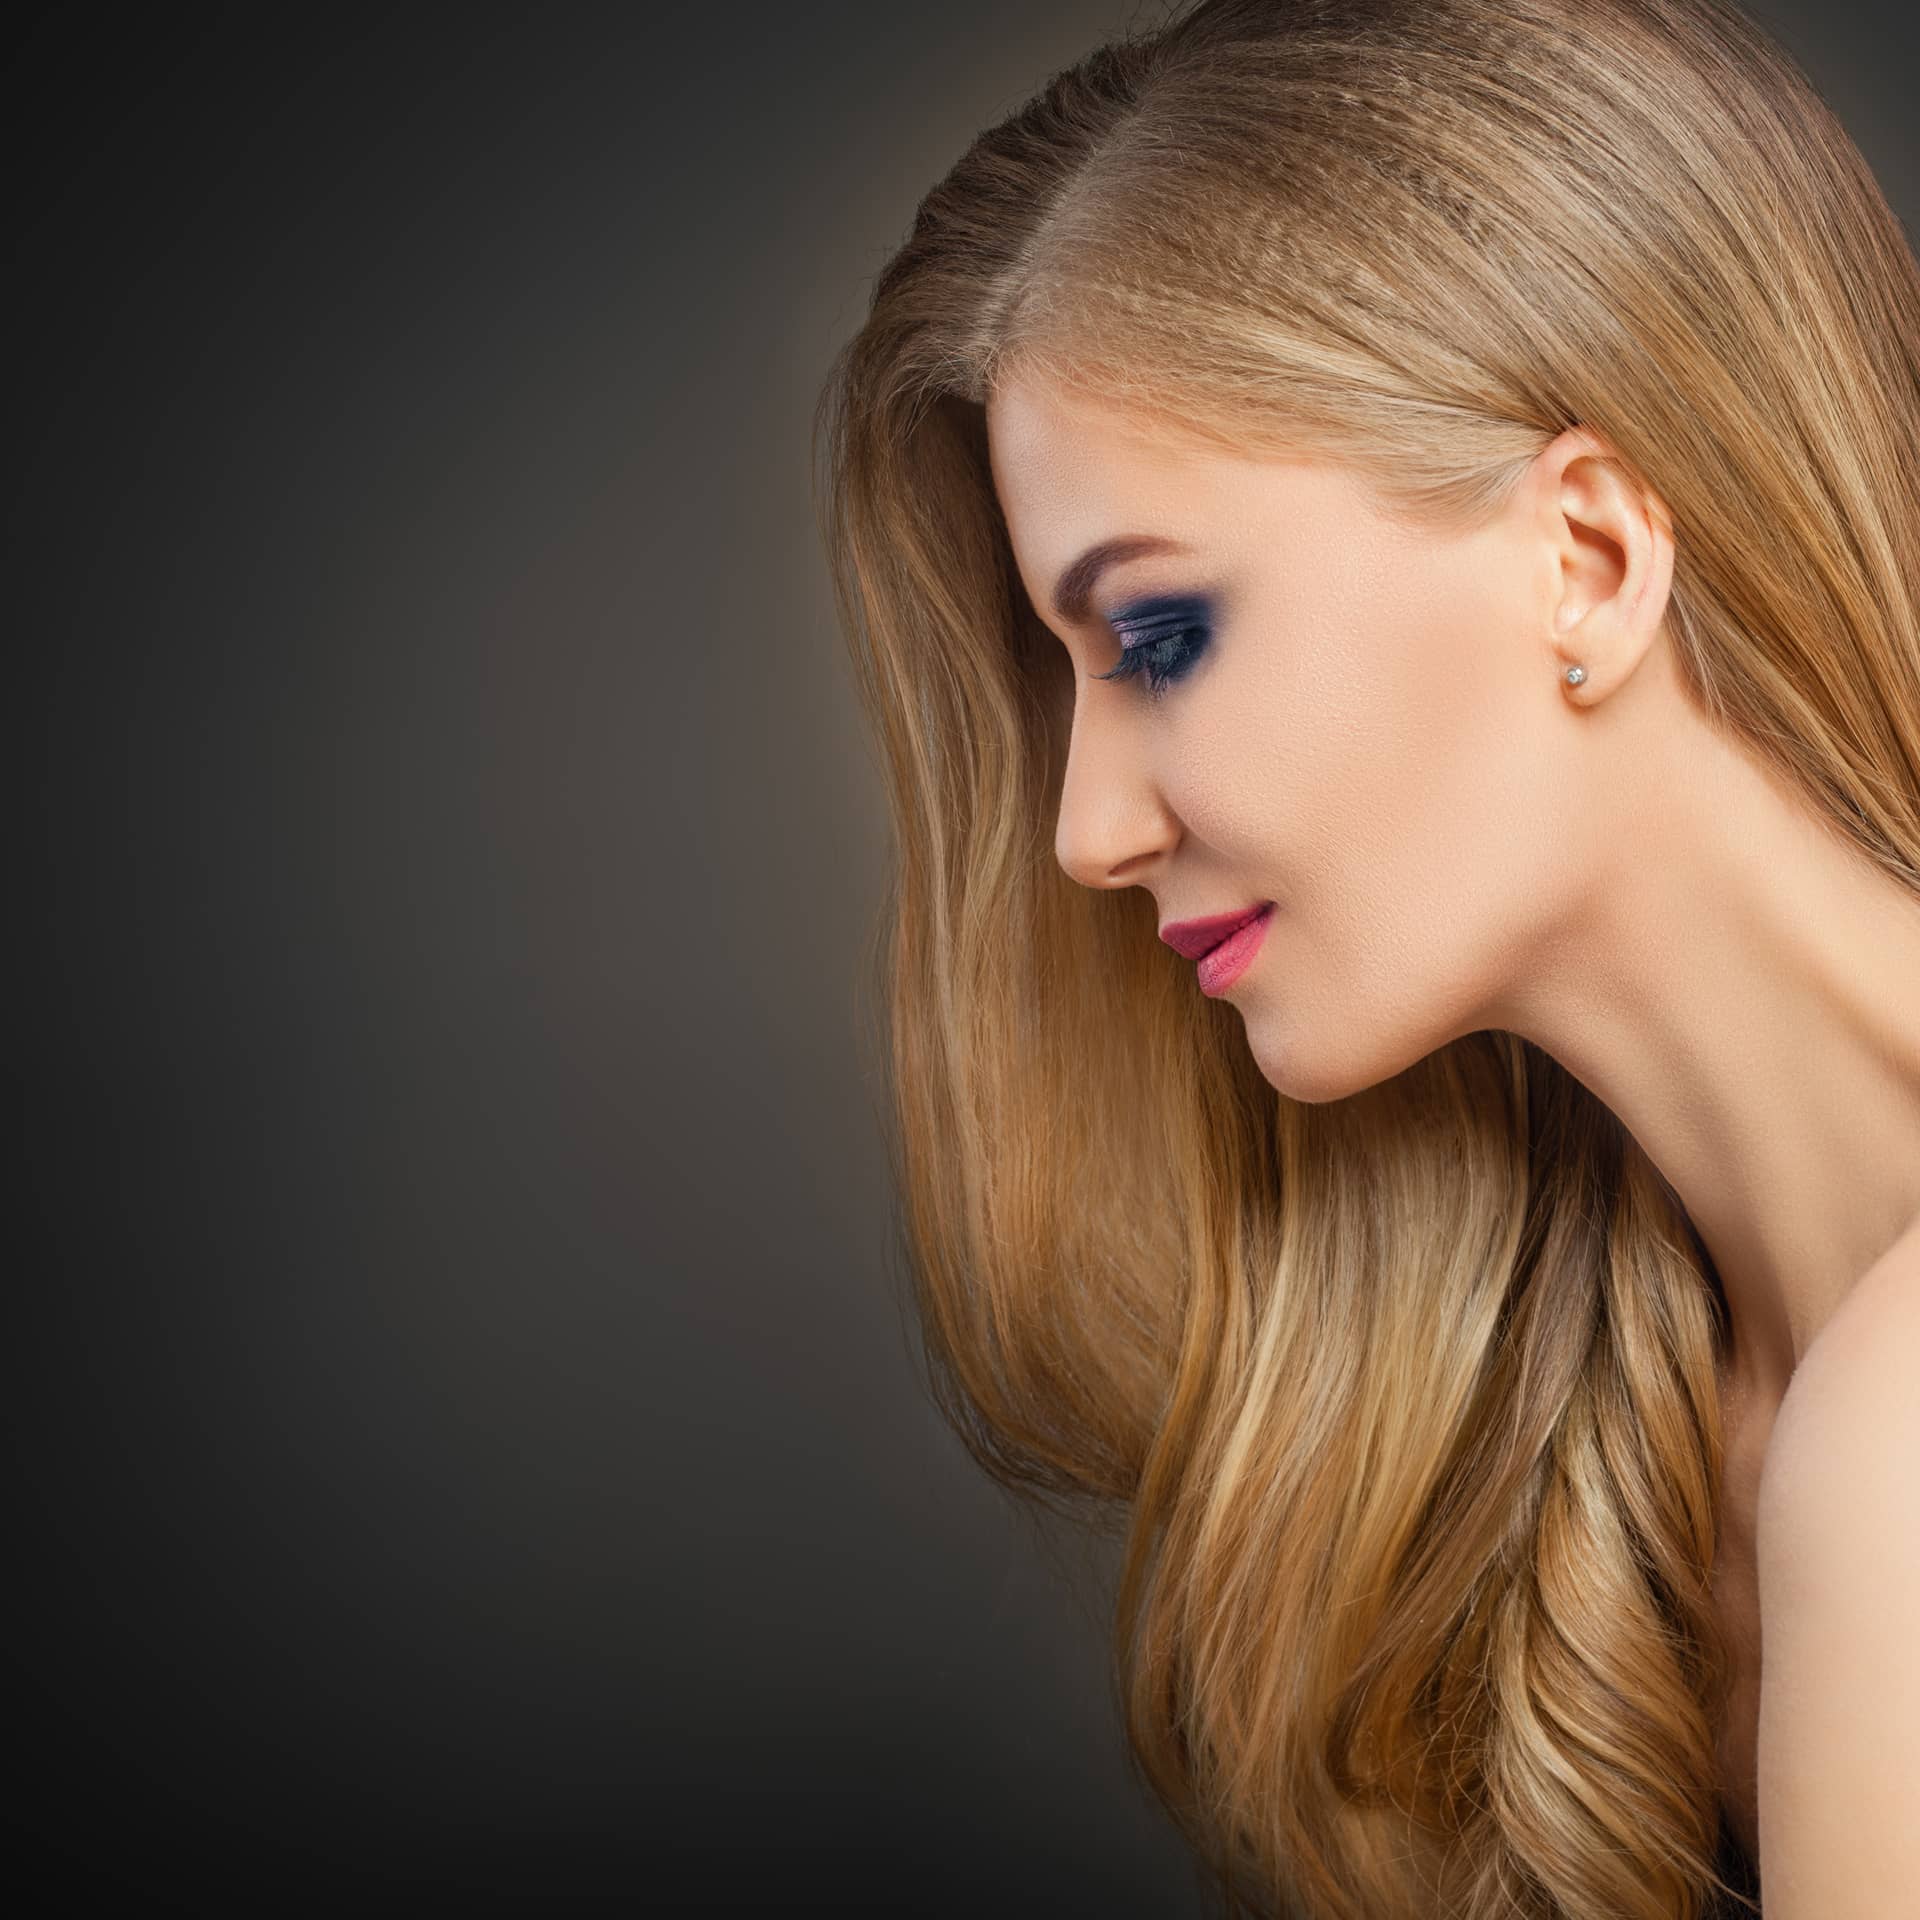 Profile photo with long blonde hair makeup fashion portrait beautiful model girl